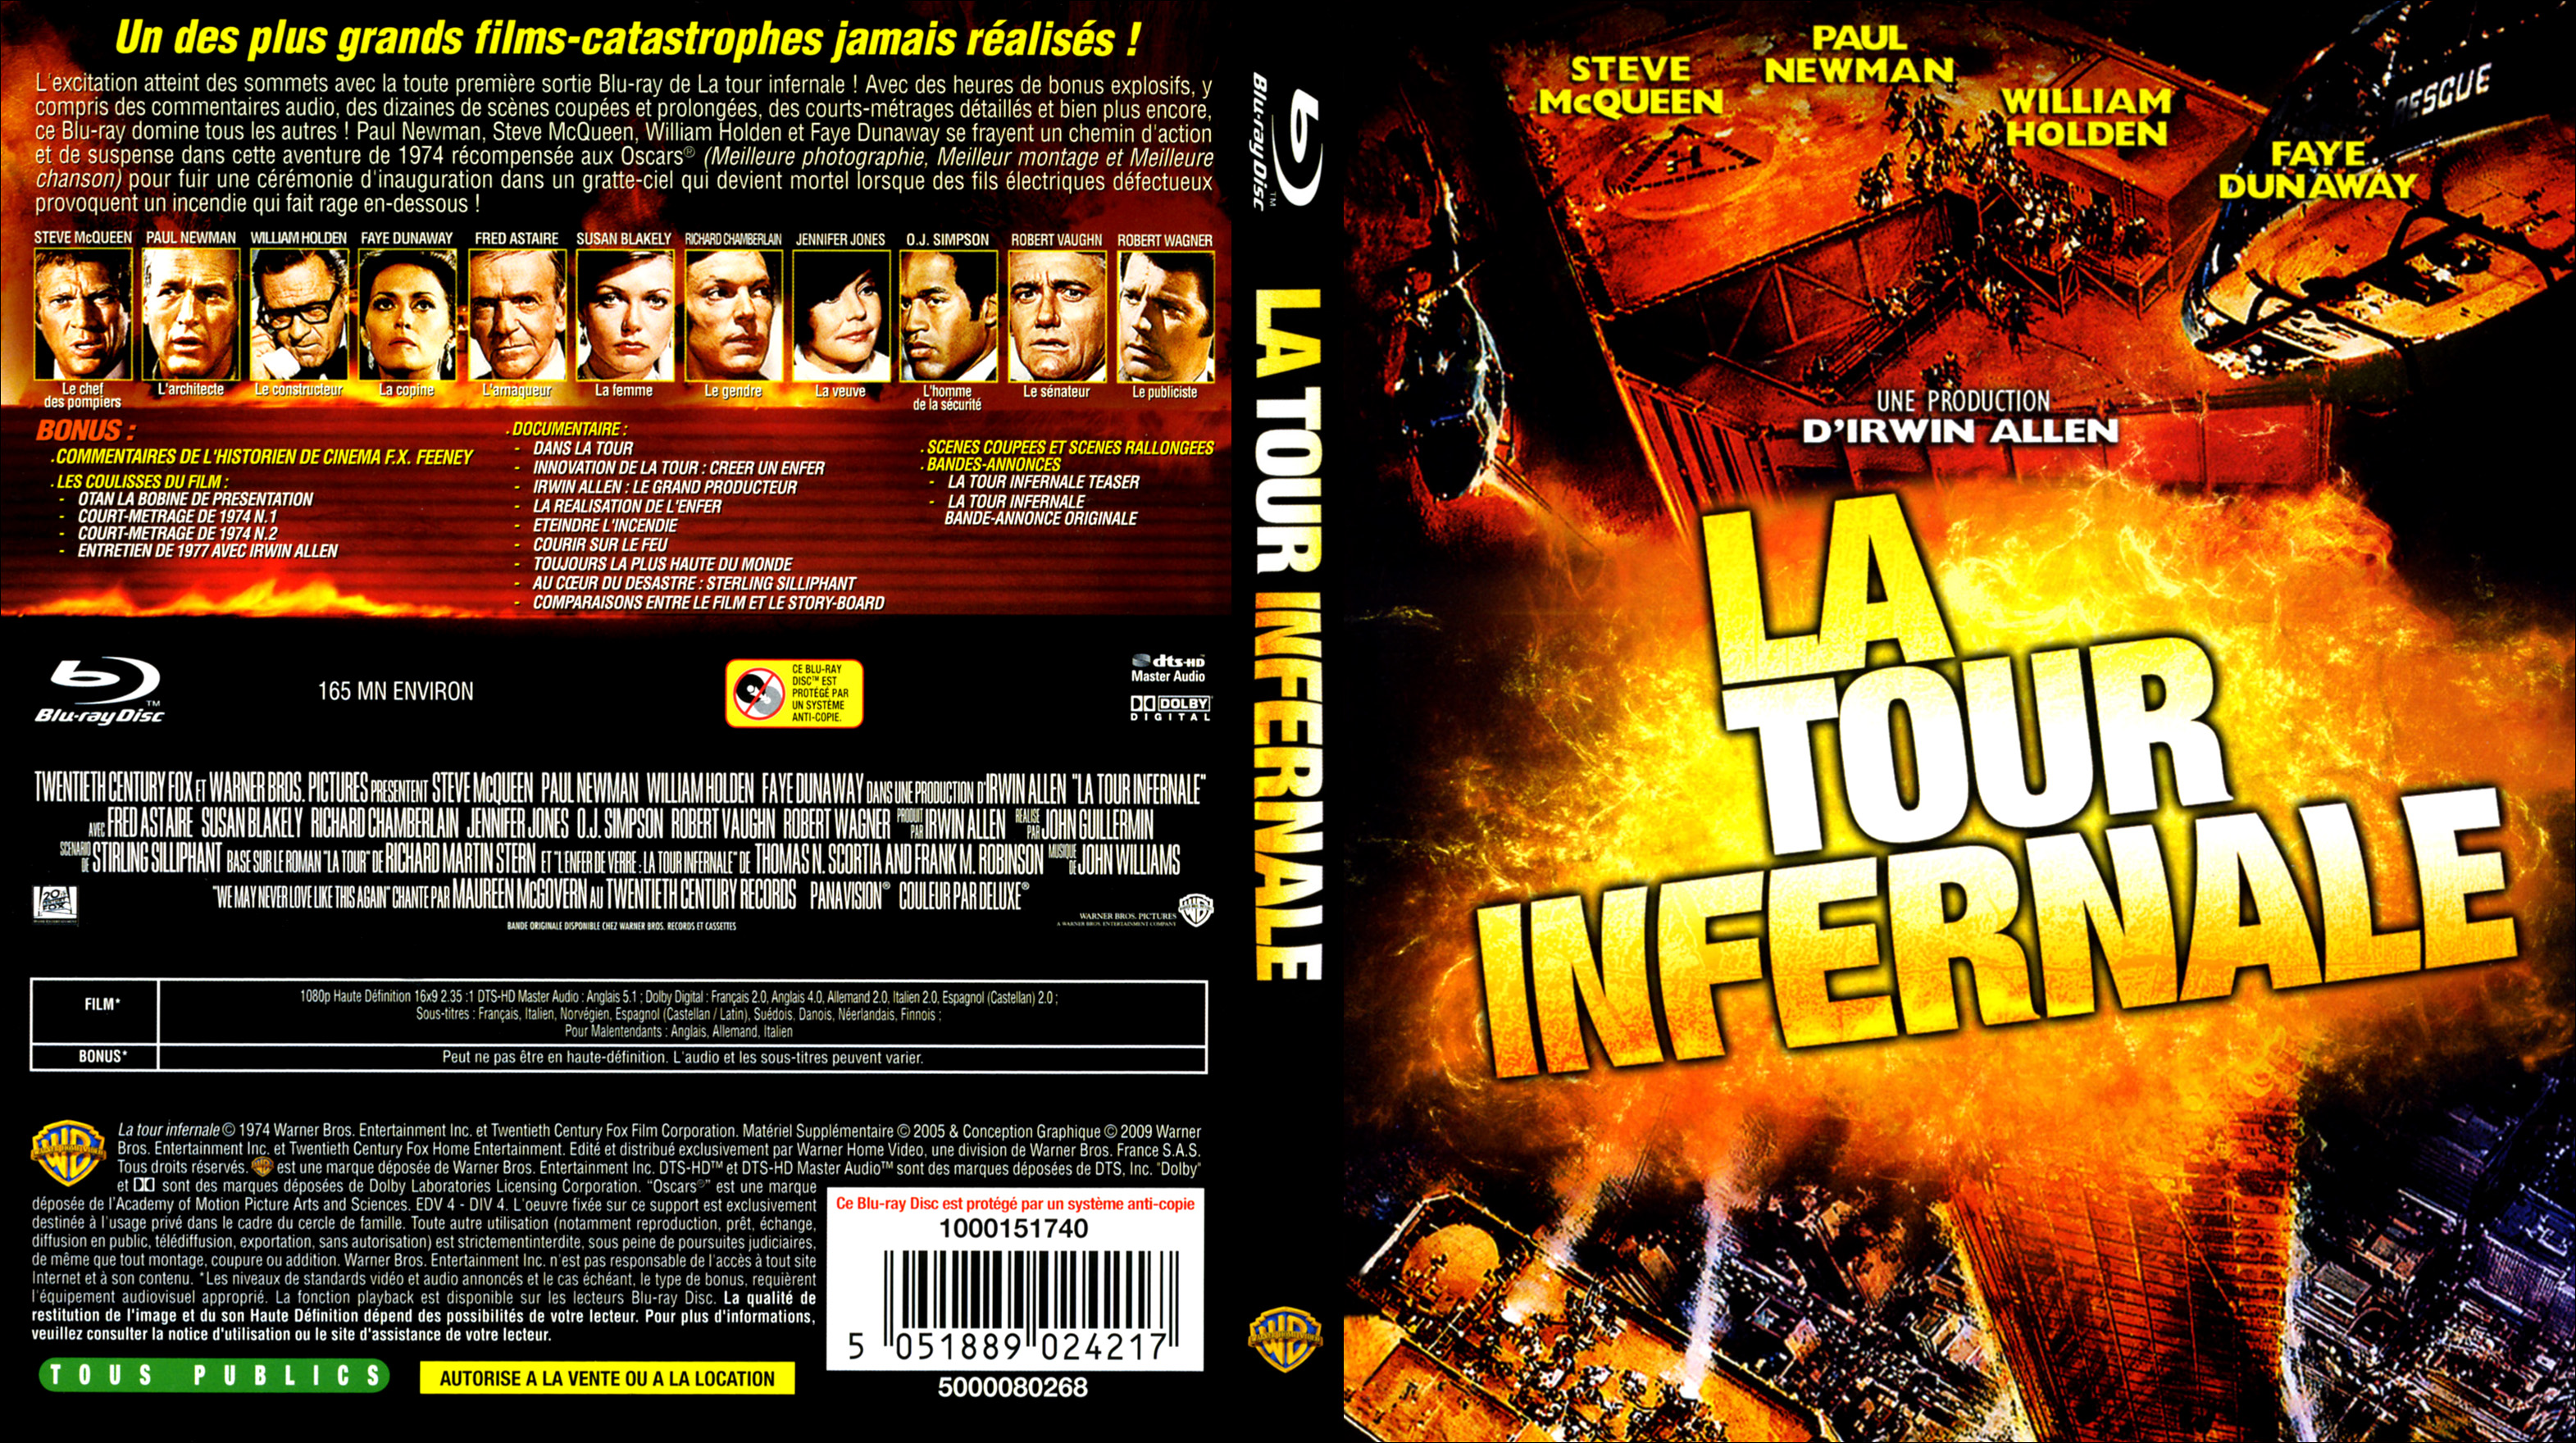 Jaquette DVD La tour infernale (BLU-RAY) v2